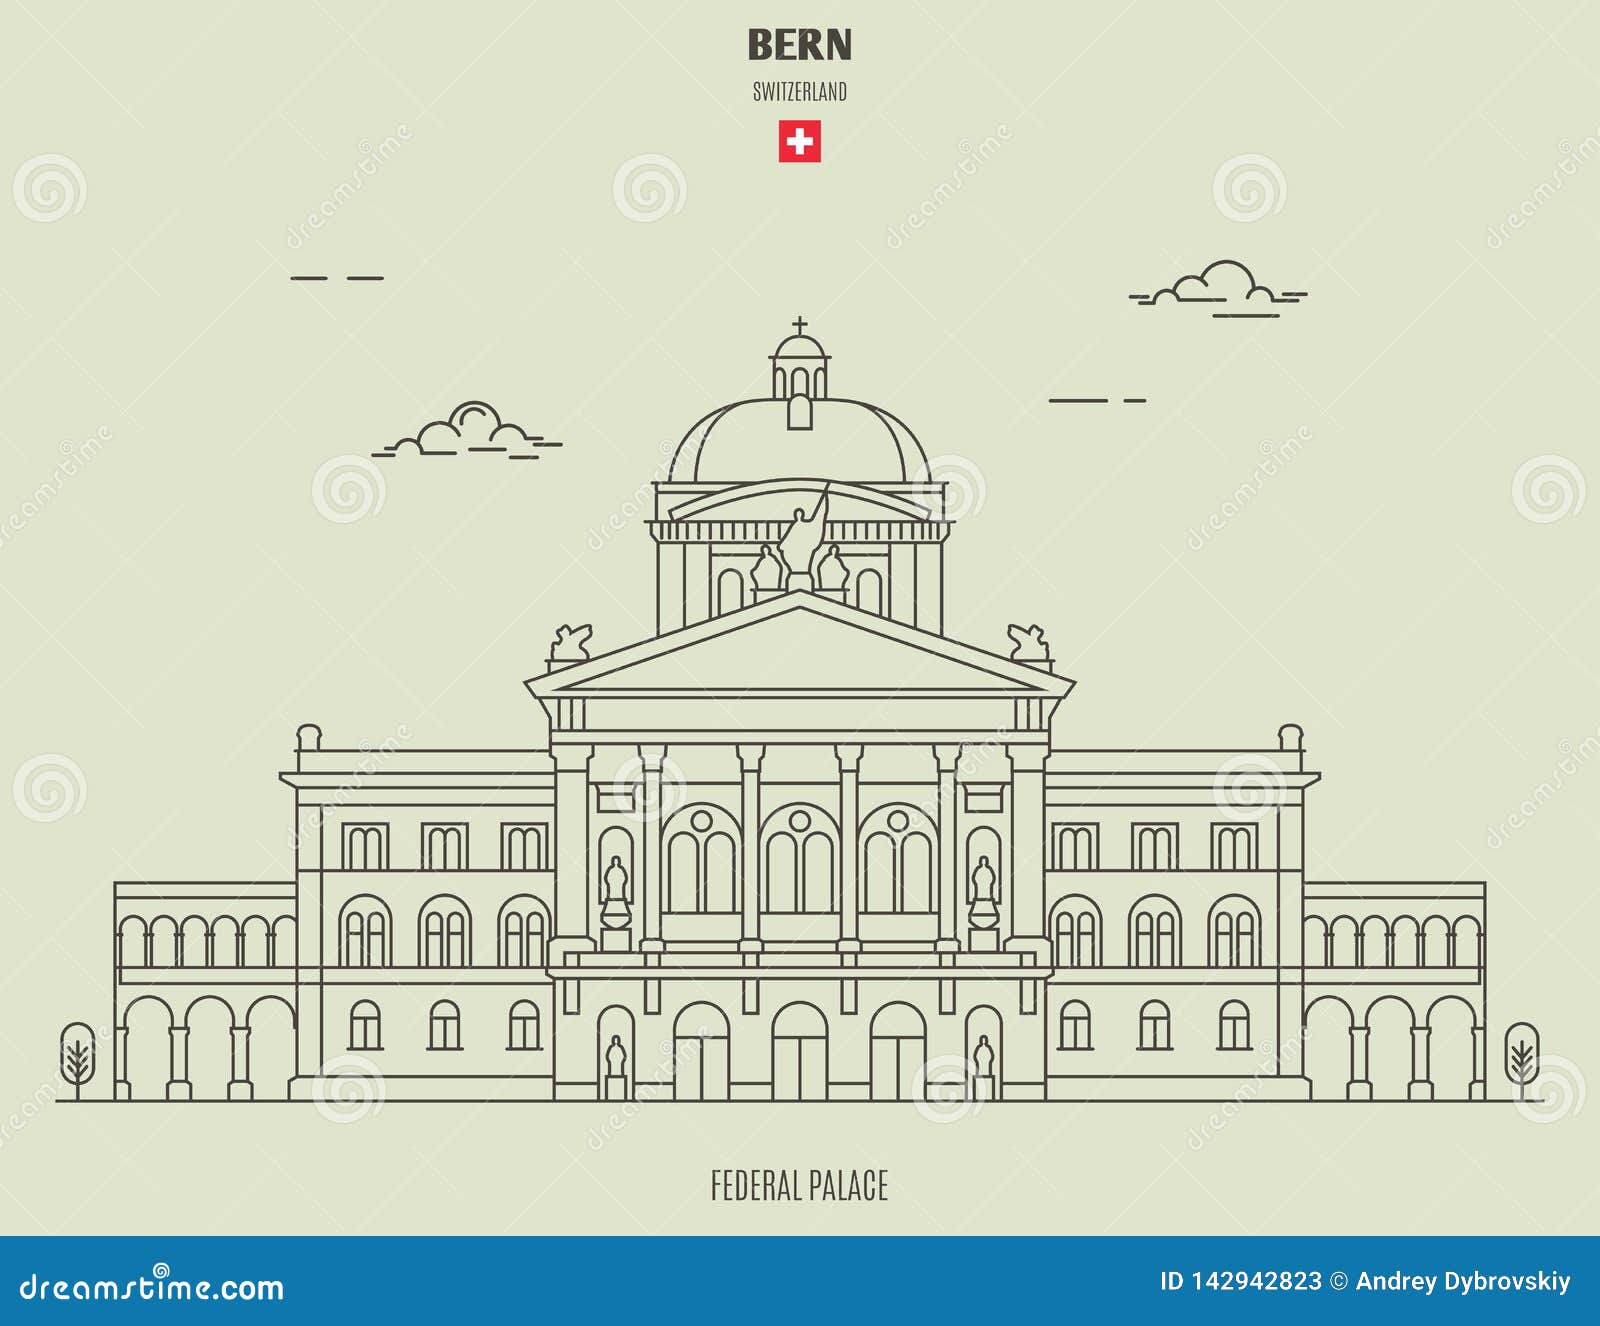 federal palace in bern, switzerland. landmark icon